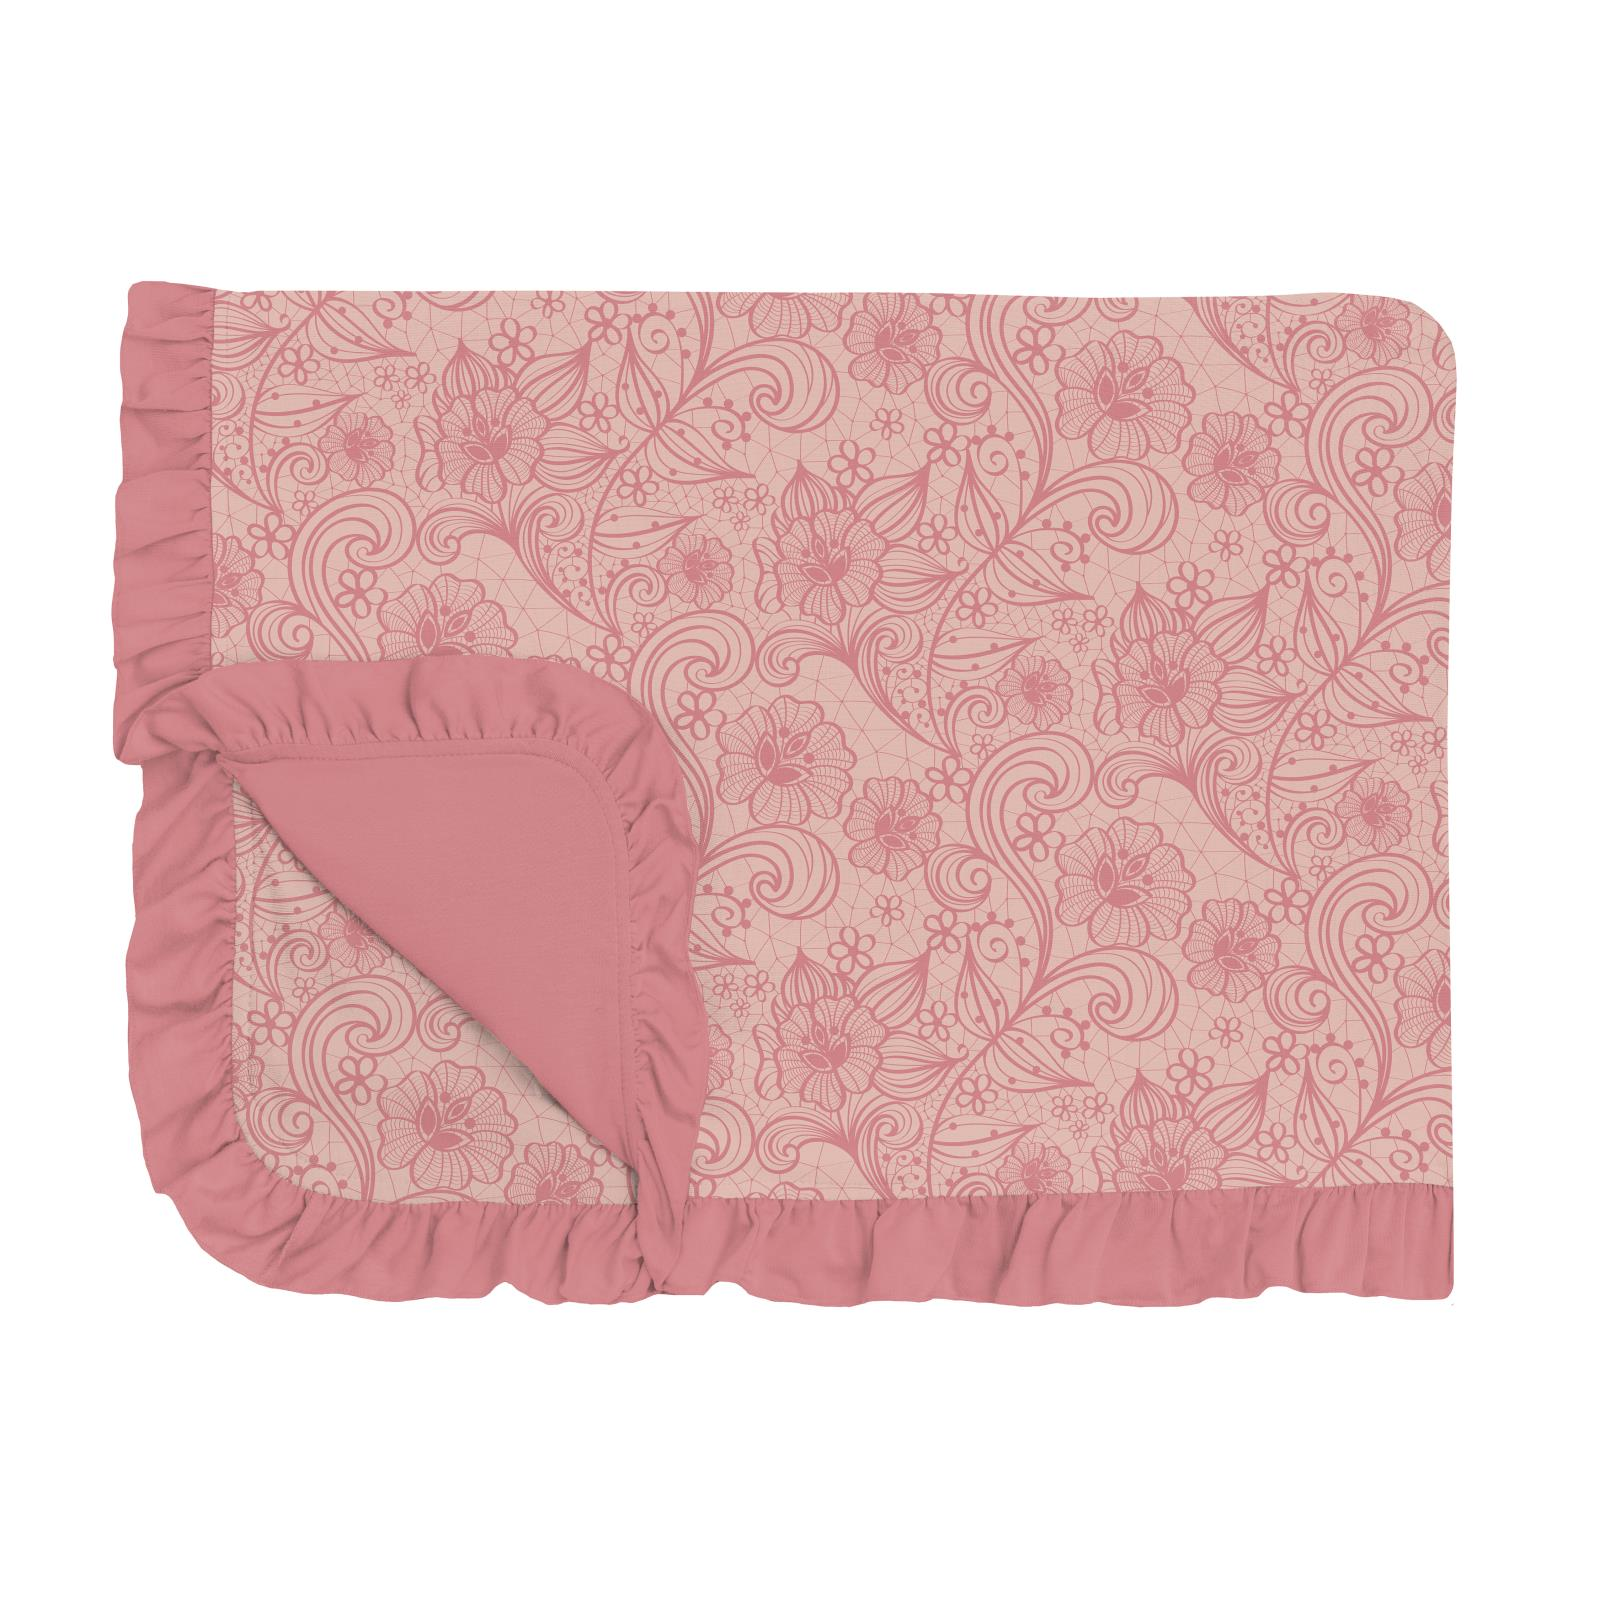 Kickee Pants Peach Blossom Lace Print Ruffle Toddler Blanket-Kickee Pants-Little Giant Kidz